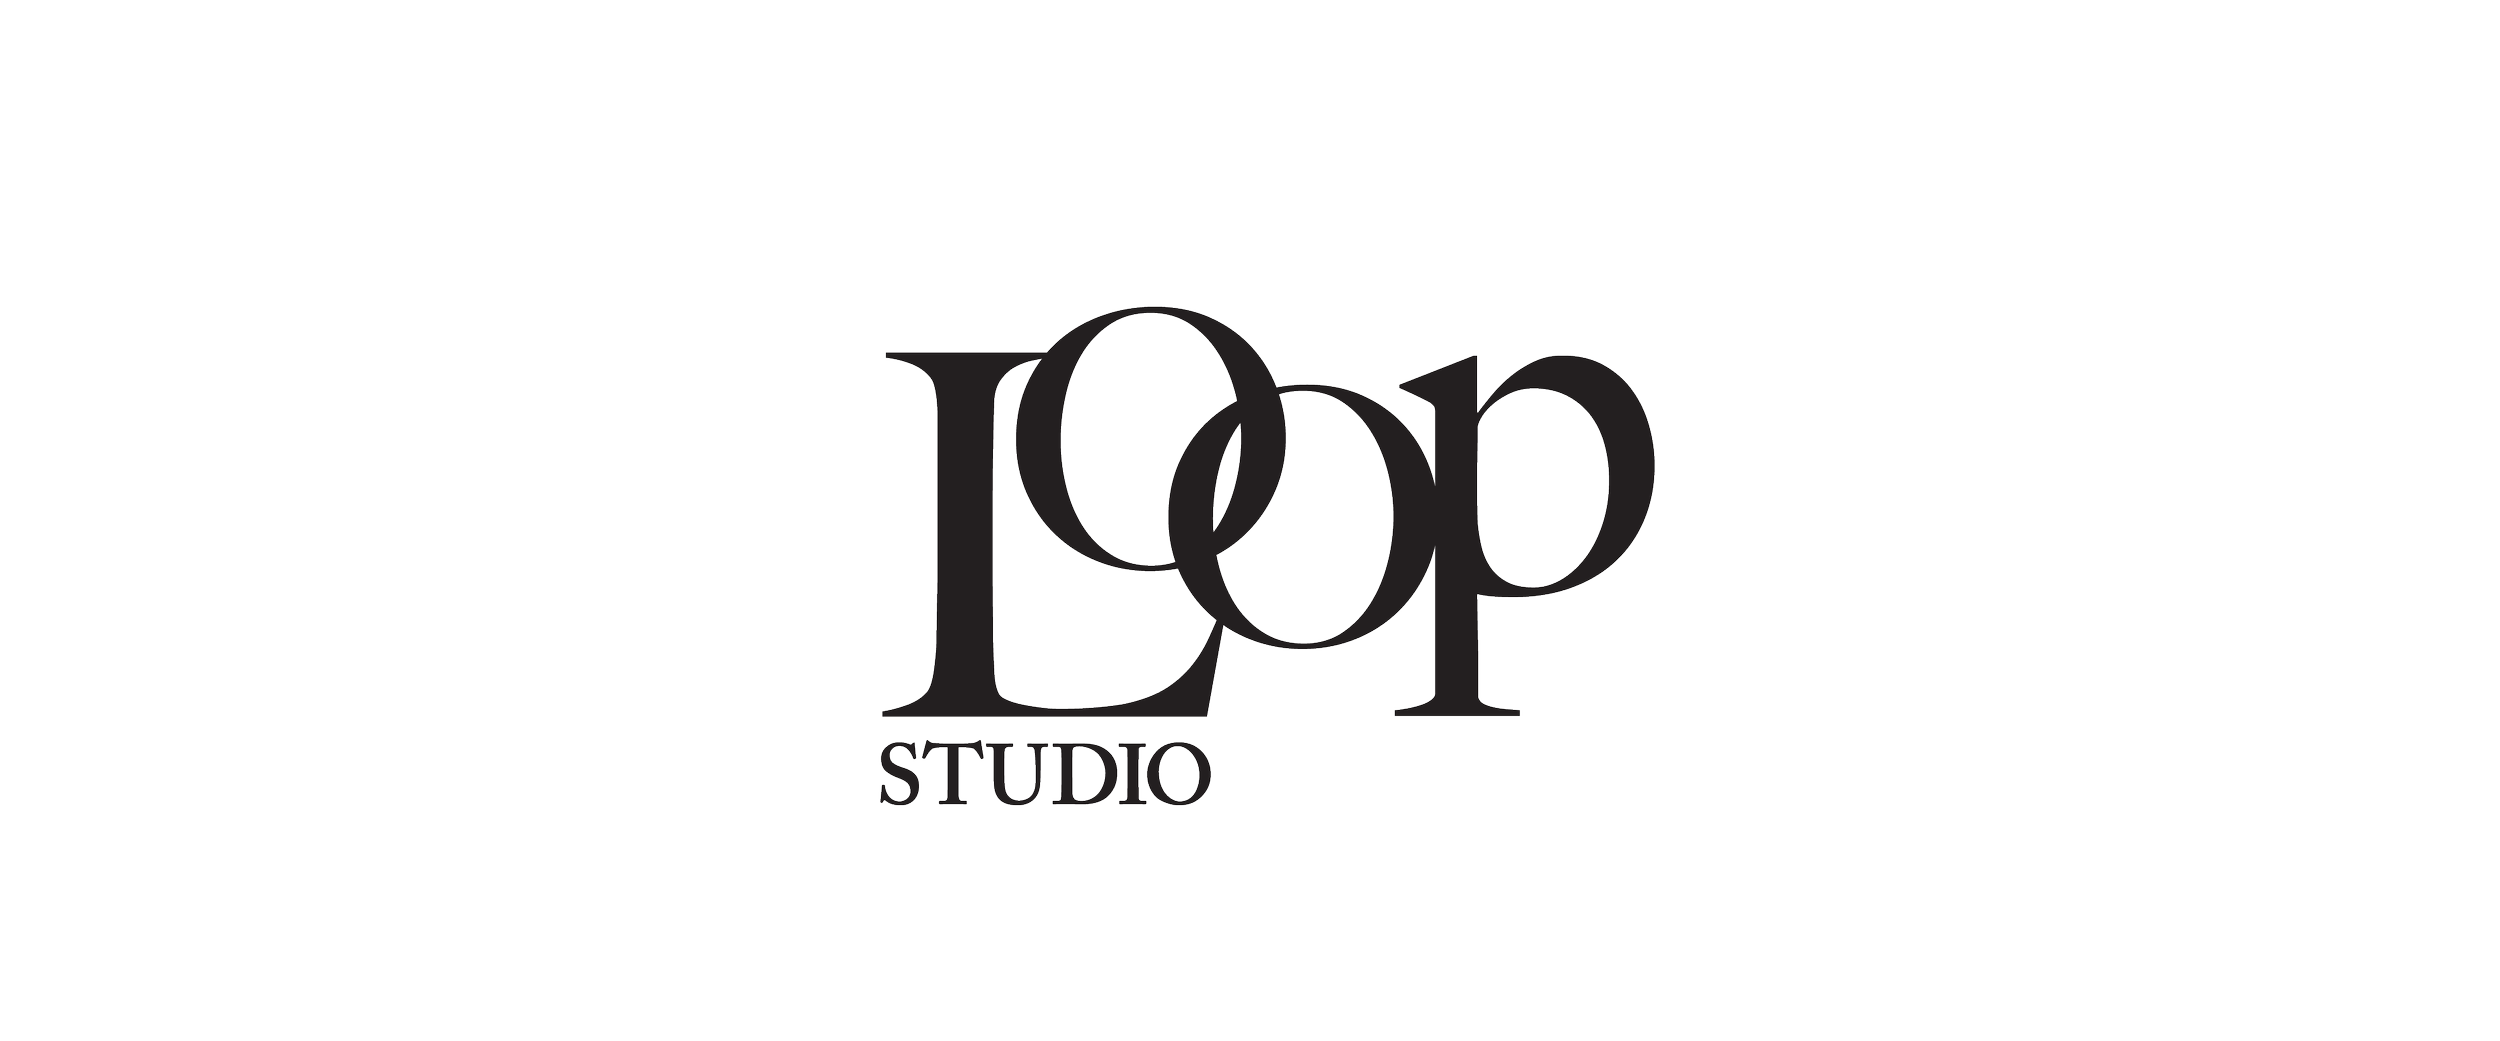 YumariDigital-Clients_Loop Studio.png